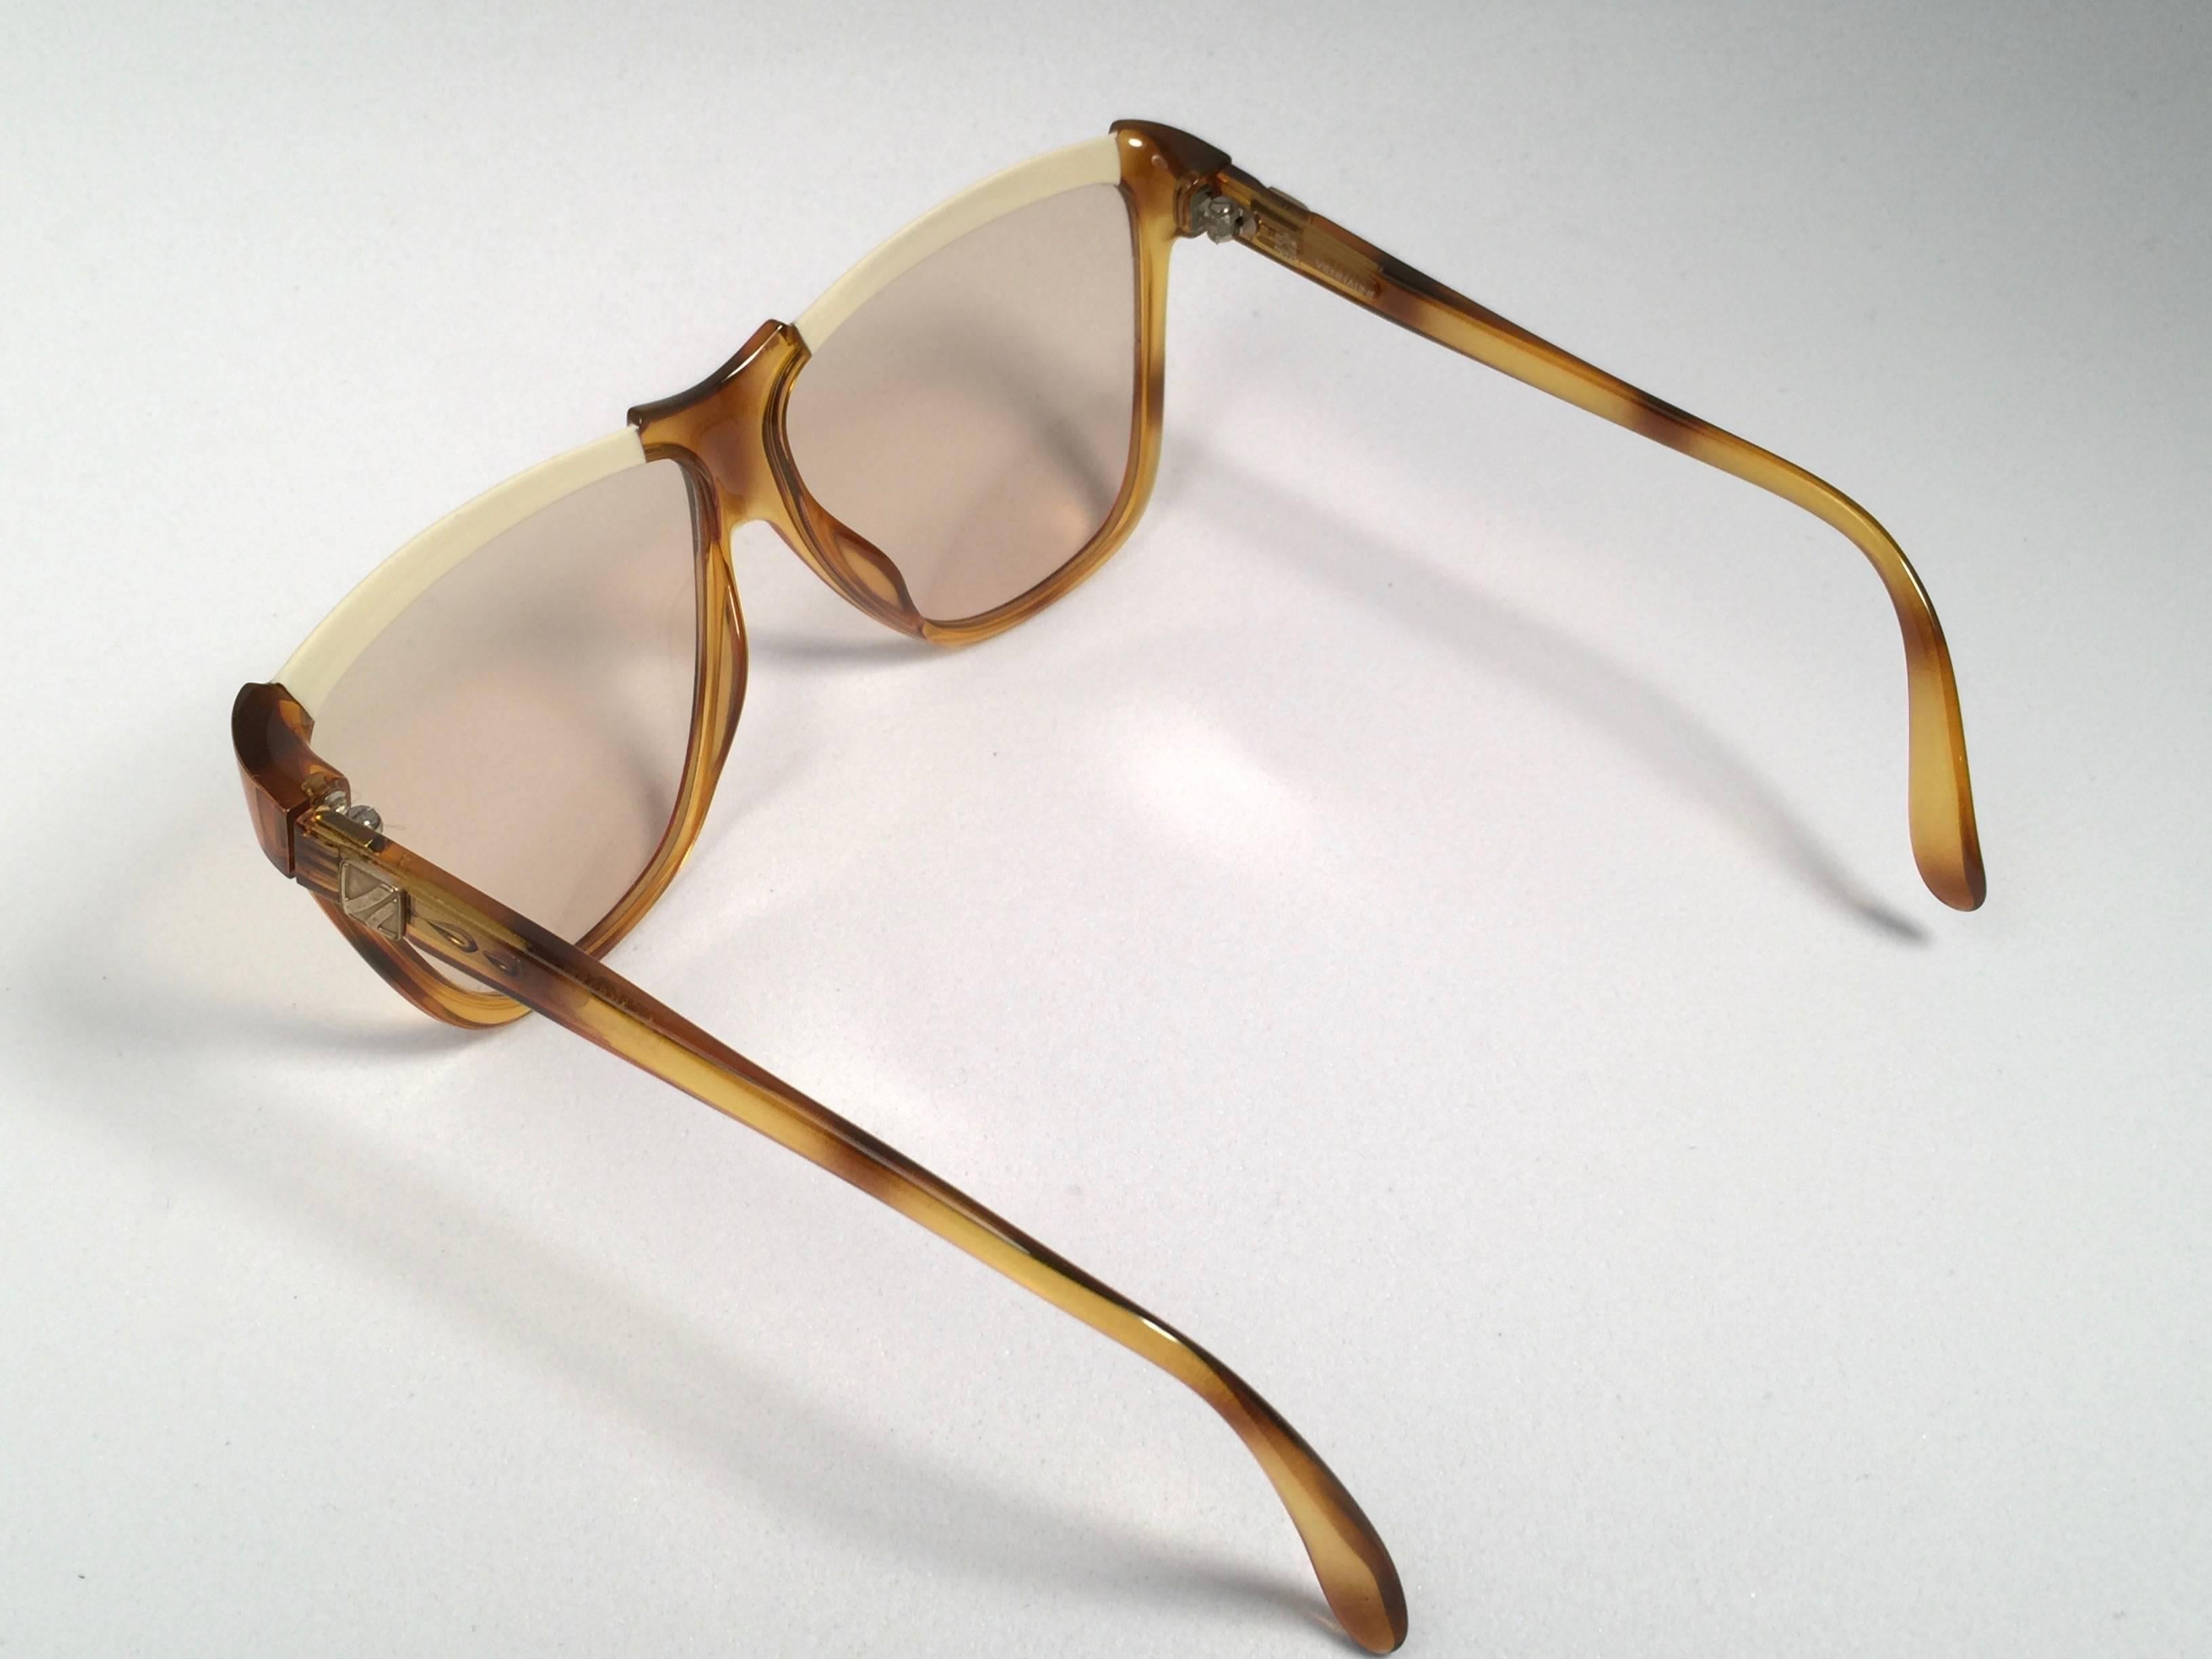 Vintage Viennaline Translucent Beige Oversized Sunglasses Made in Germany 1980's 1